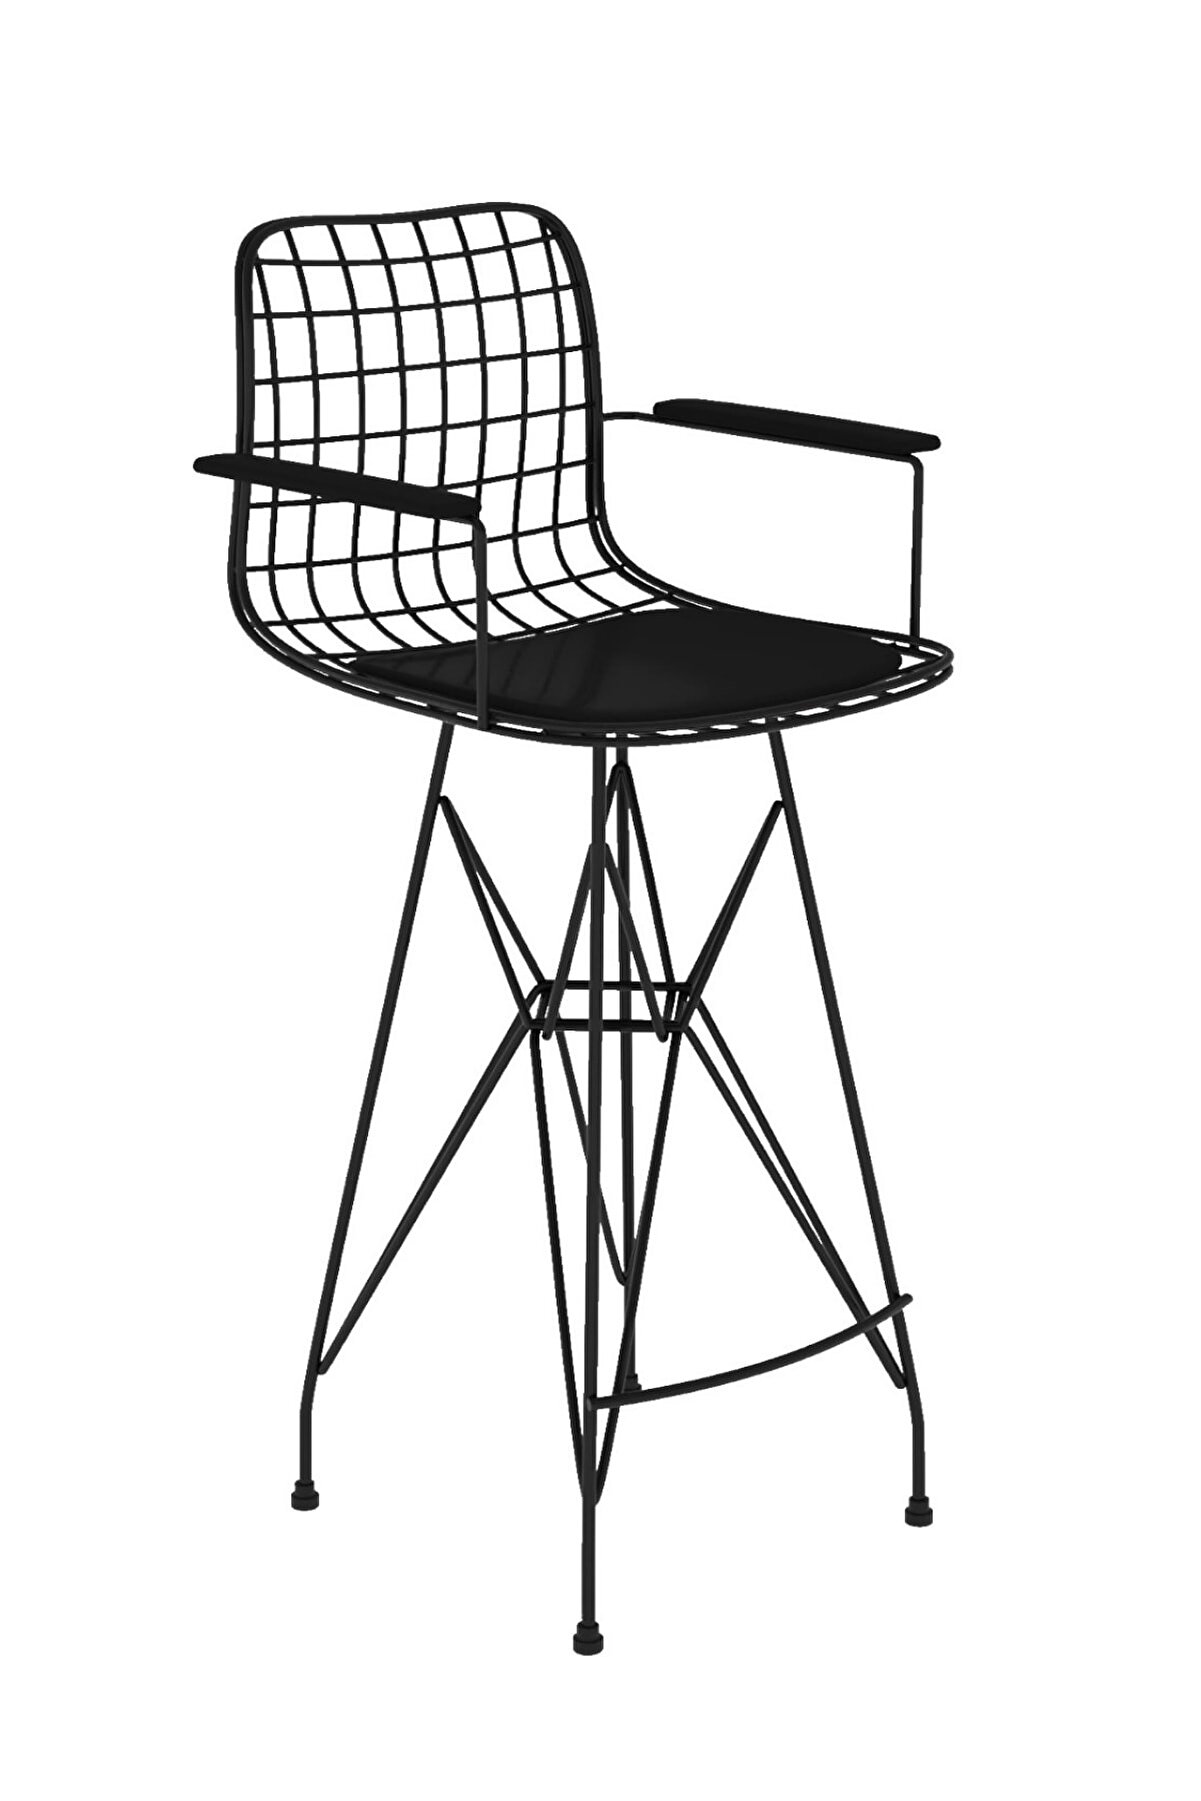 Kenzlife Knsz kafes tel bar sandalyesi 1 li zengin syhsyh kolçaklı ofis cafe bahçe mutfak